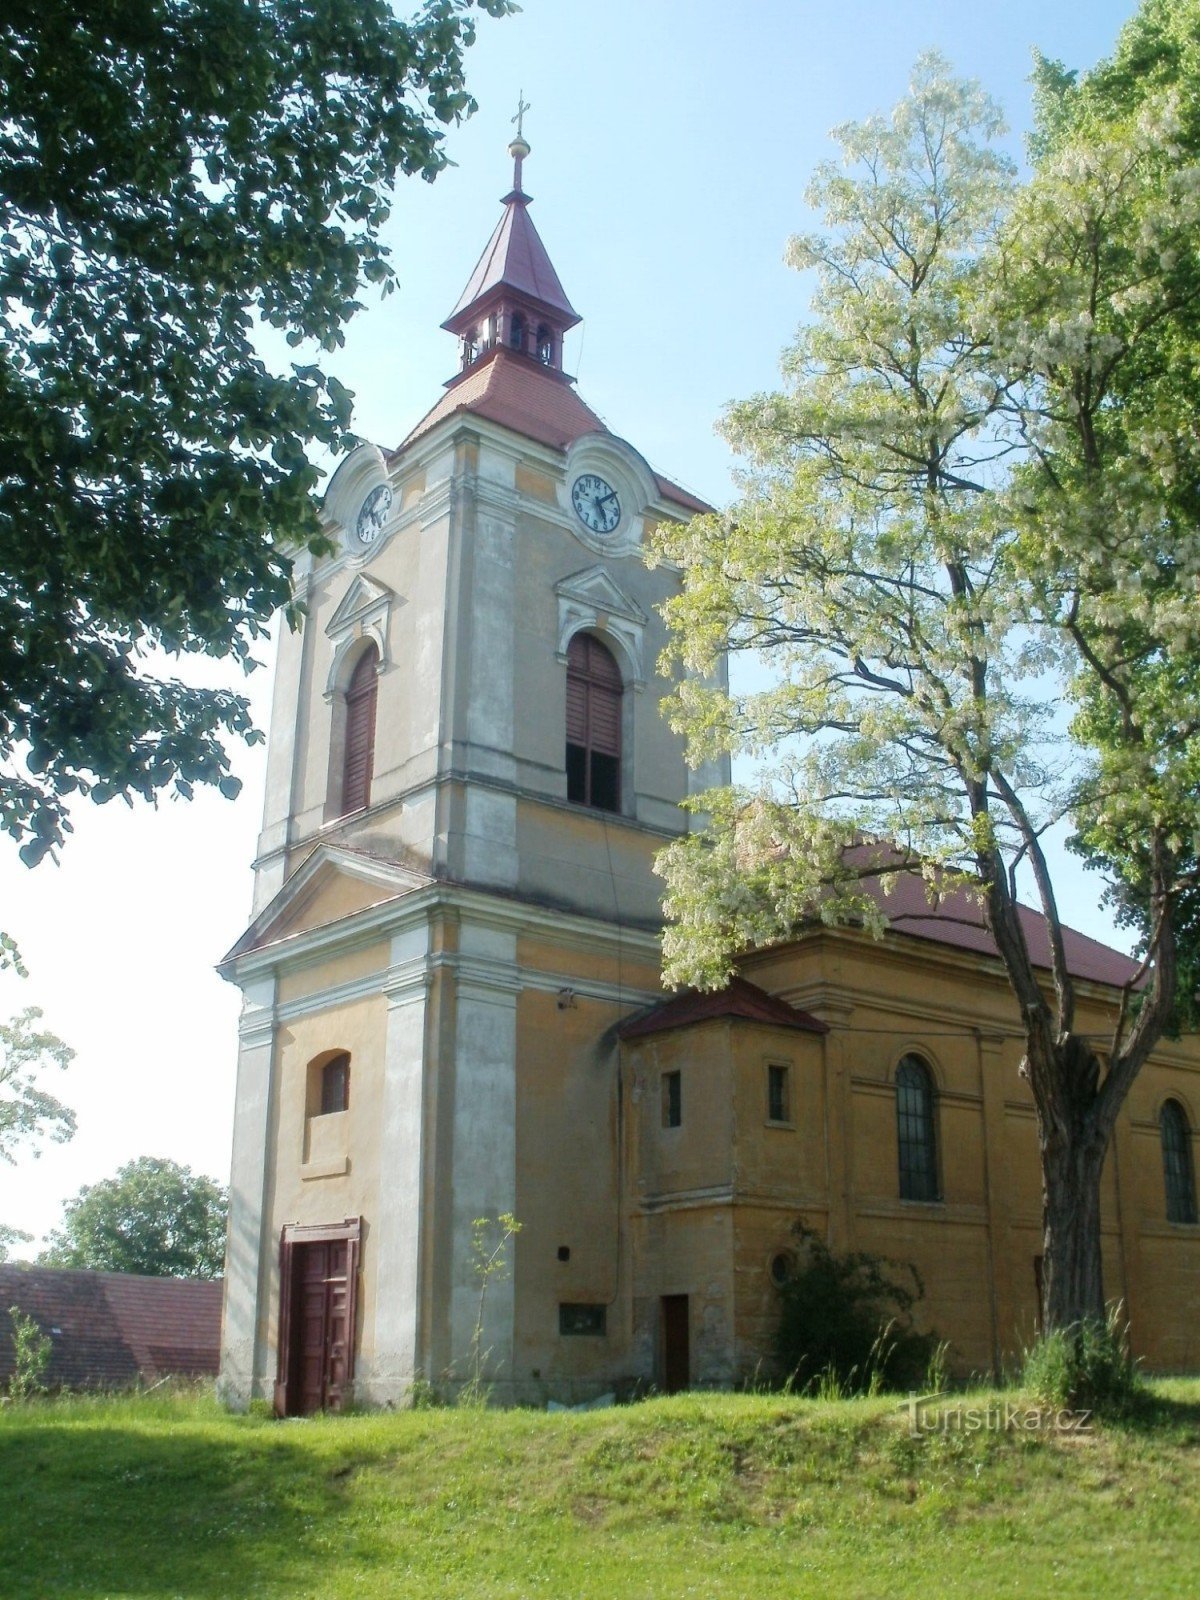 Jeníkovice - iglesia de St. Pedro y Pablo